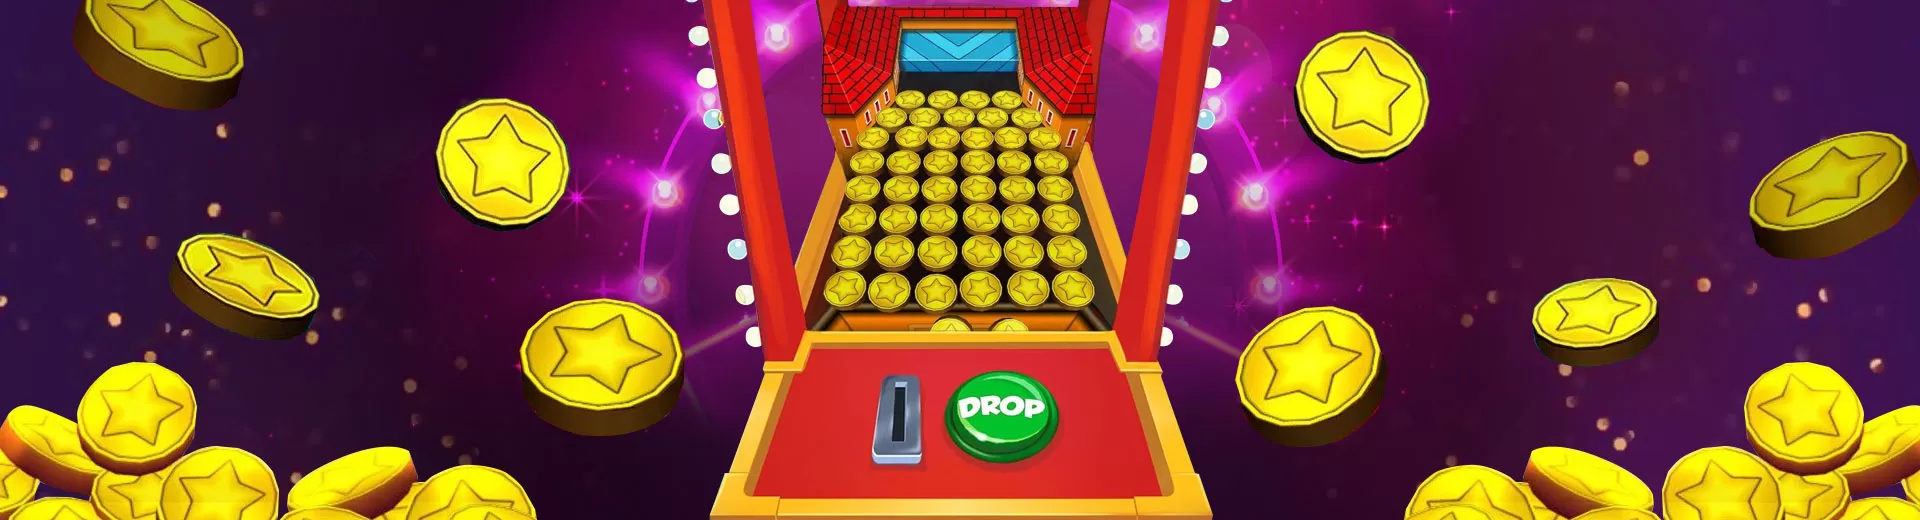 Coin Dozer Free Prizes Emulator Pc